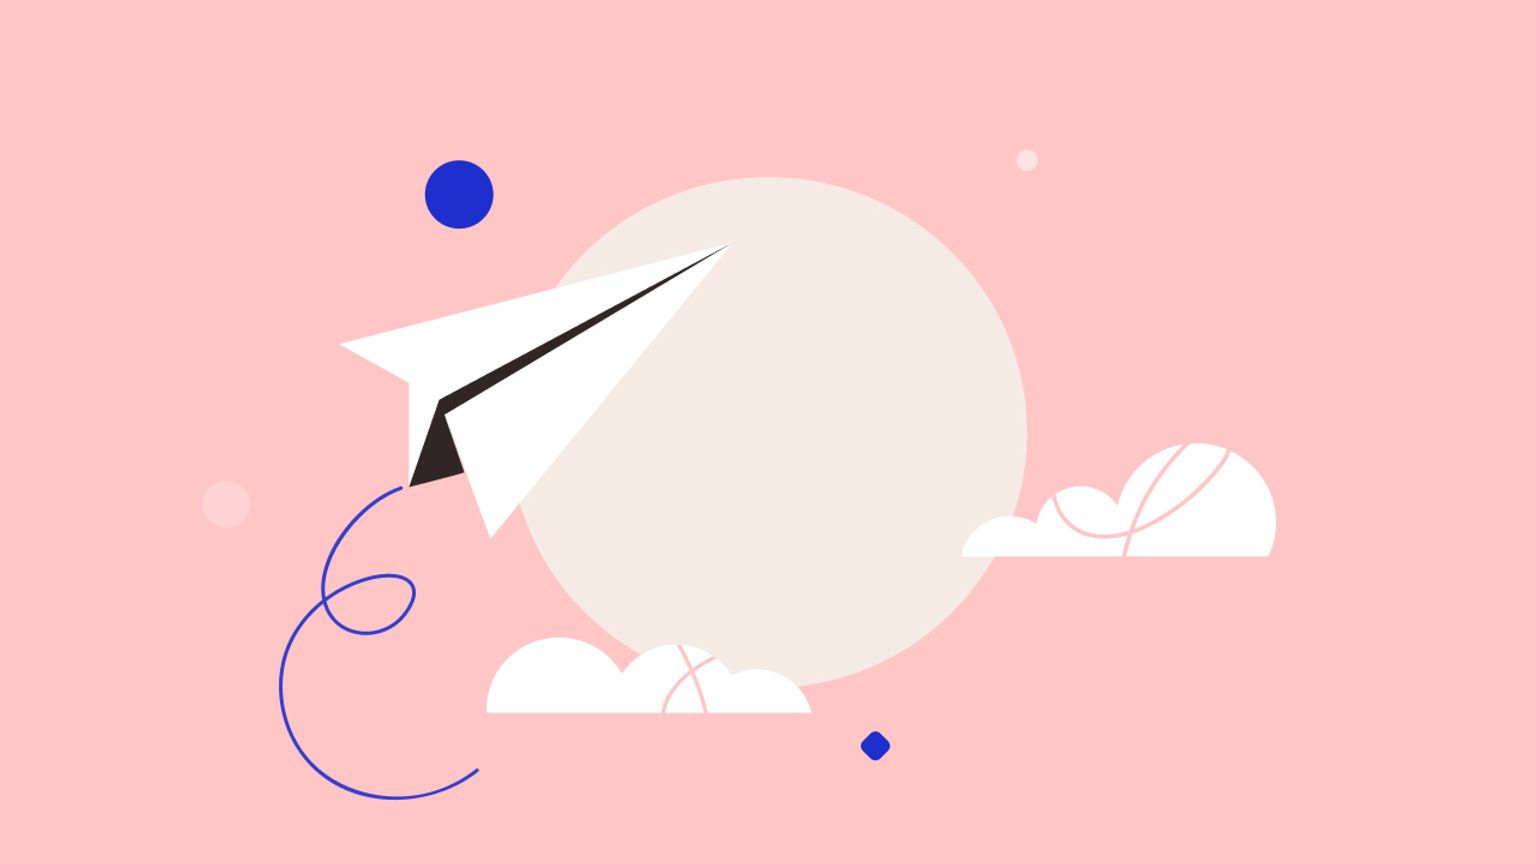 cartoon image of a paper plane